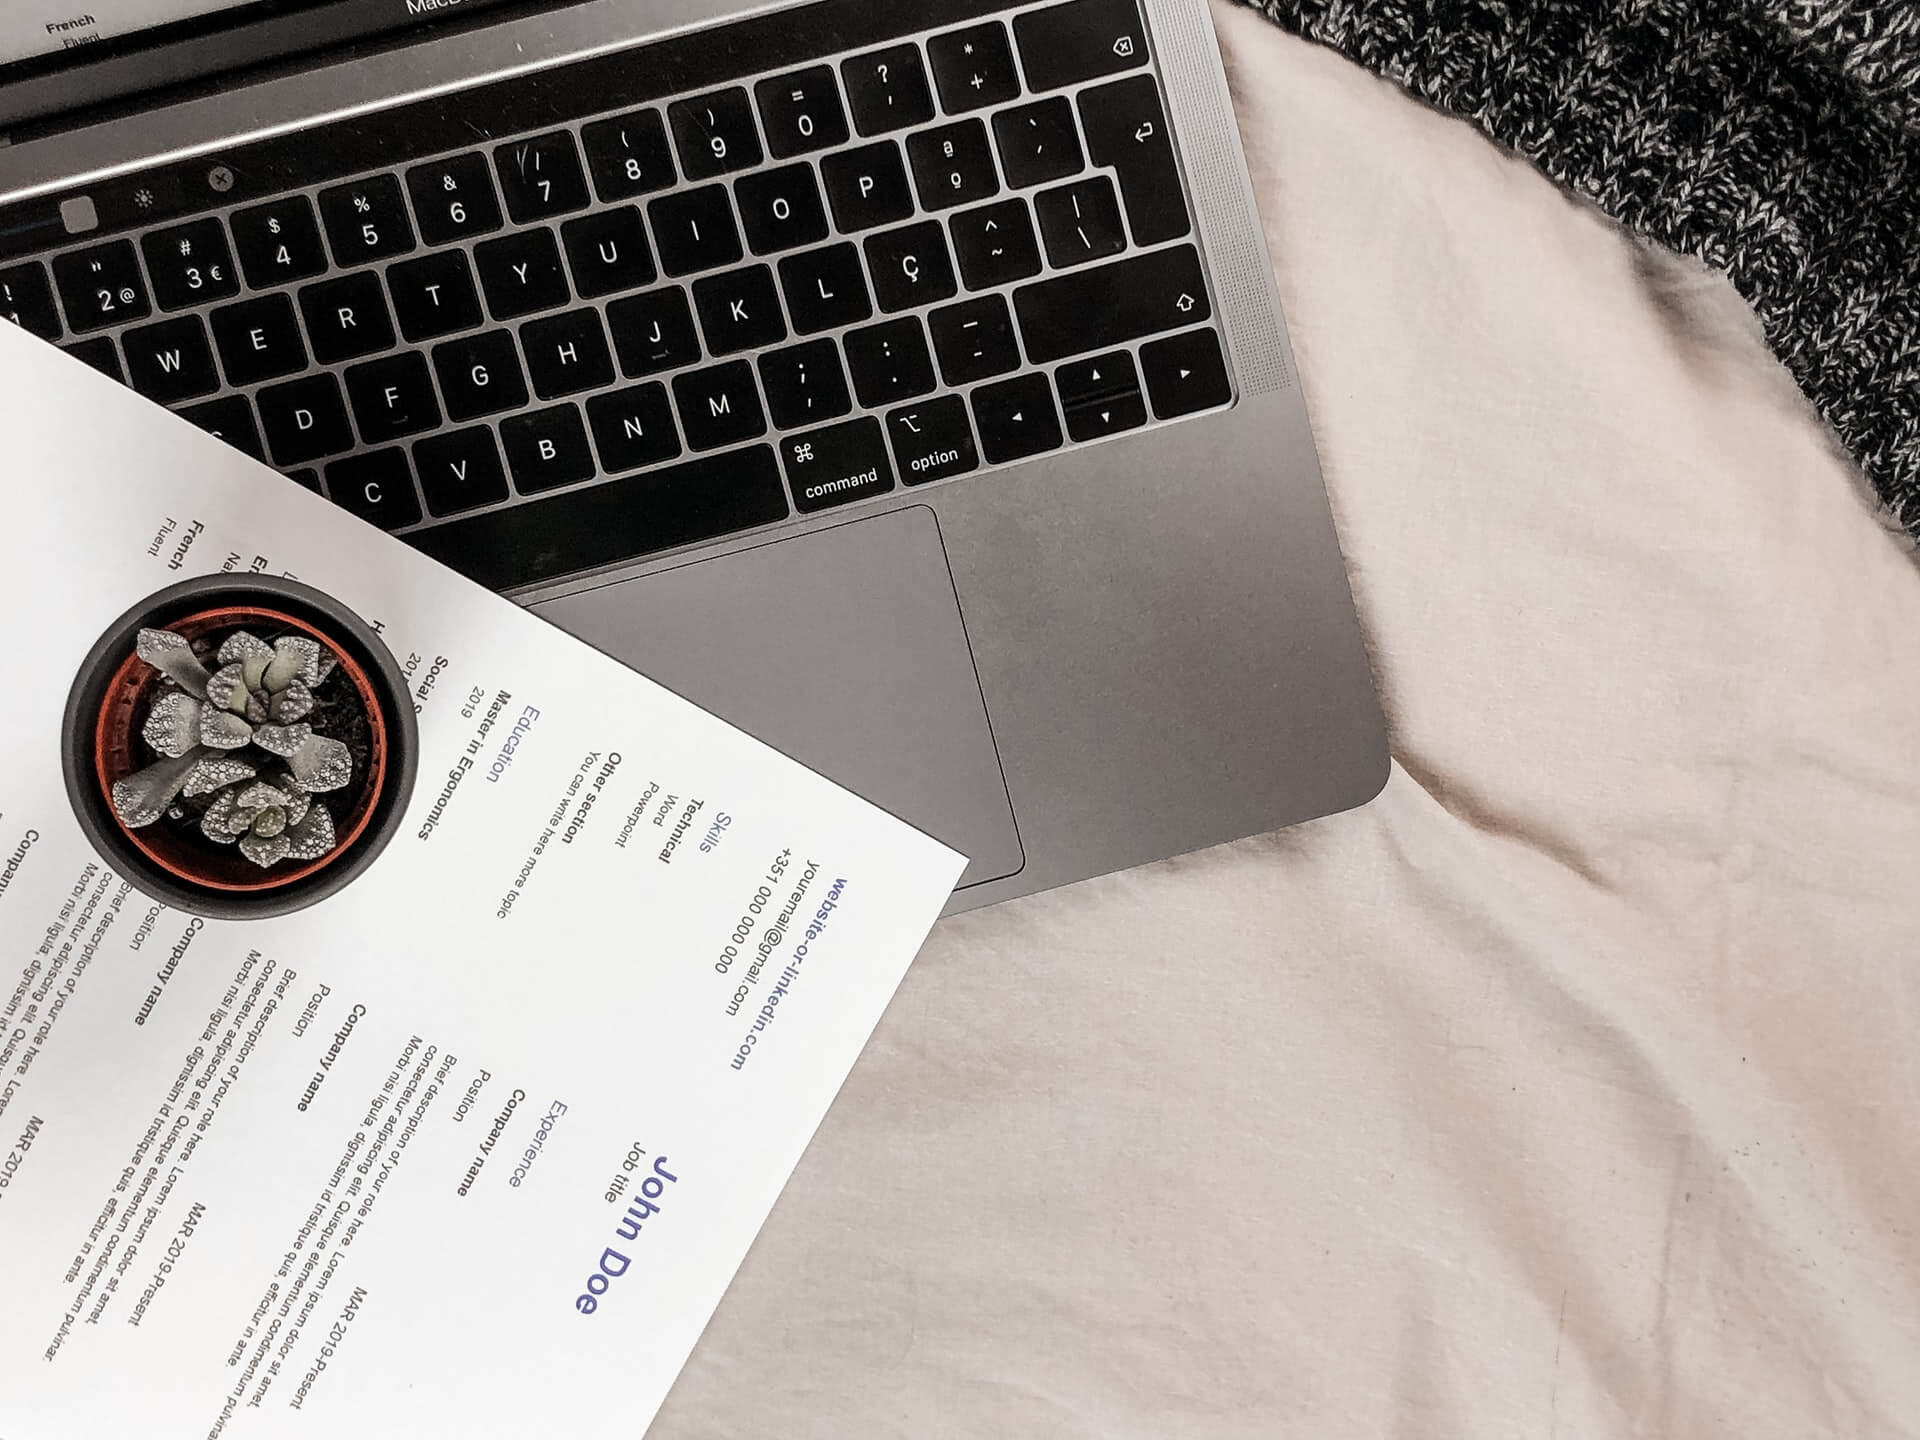 A resume lying on a laptop